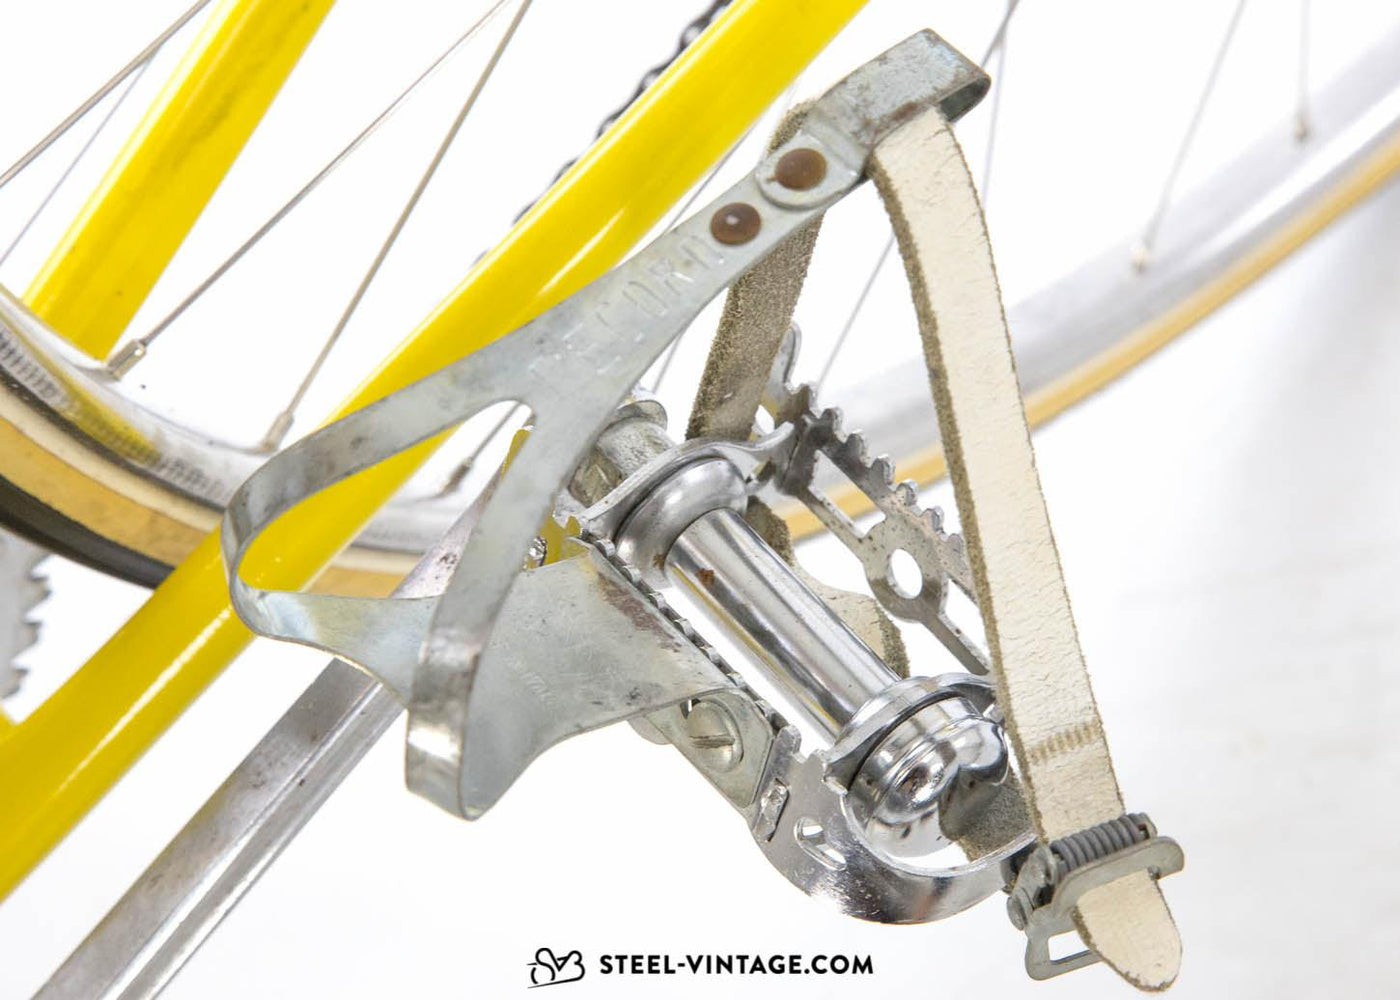 Bartali Classic Racing Bicycle 1950s - Steel Vintage Bikes